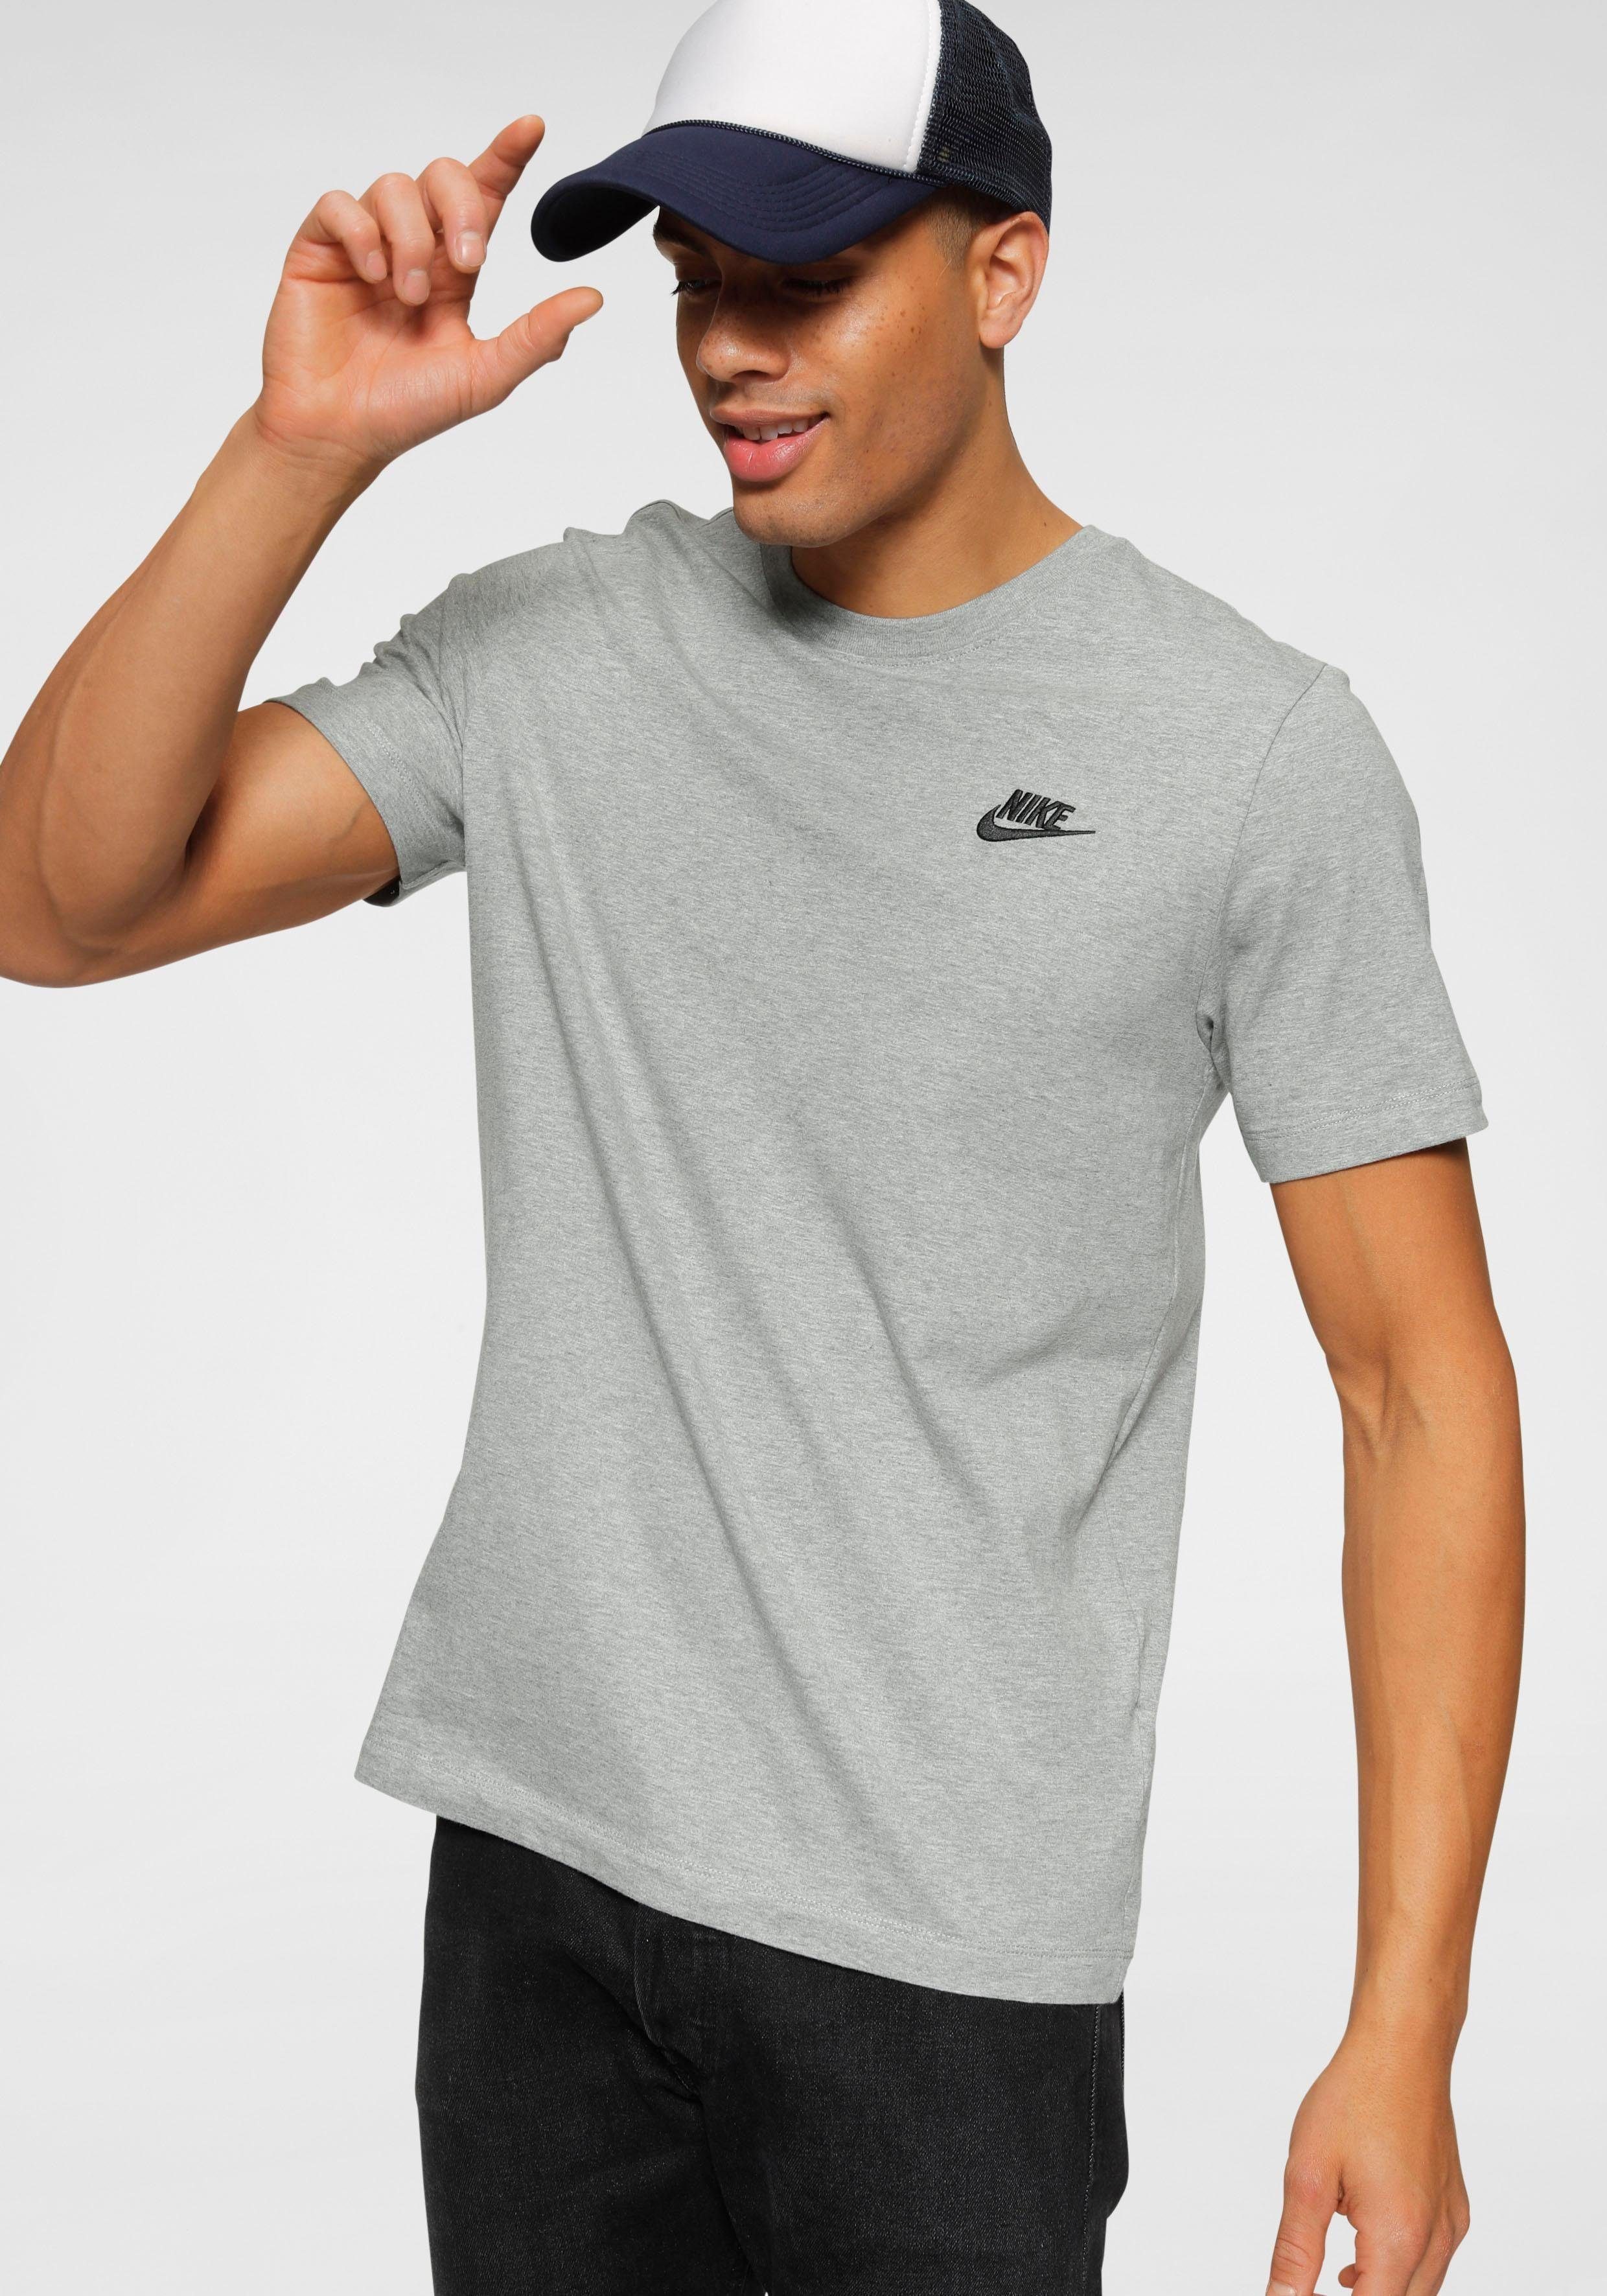 OTTO online | Herren Nike Sportswear Graue kaufen Jogginghosen